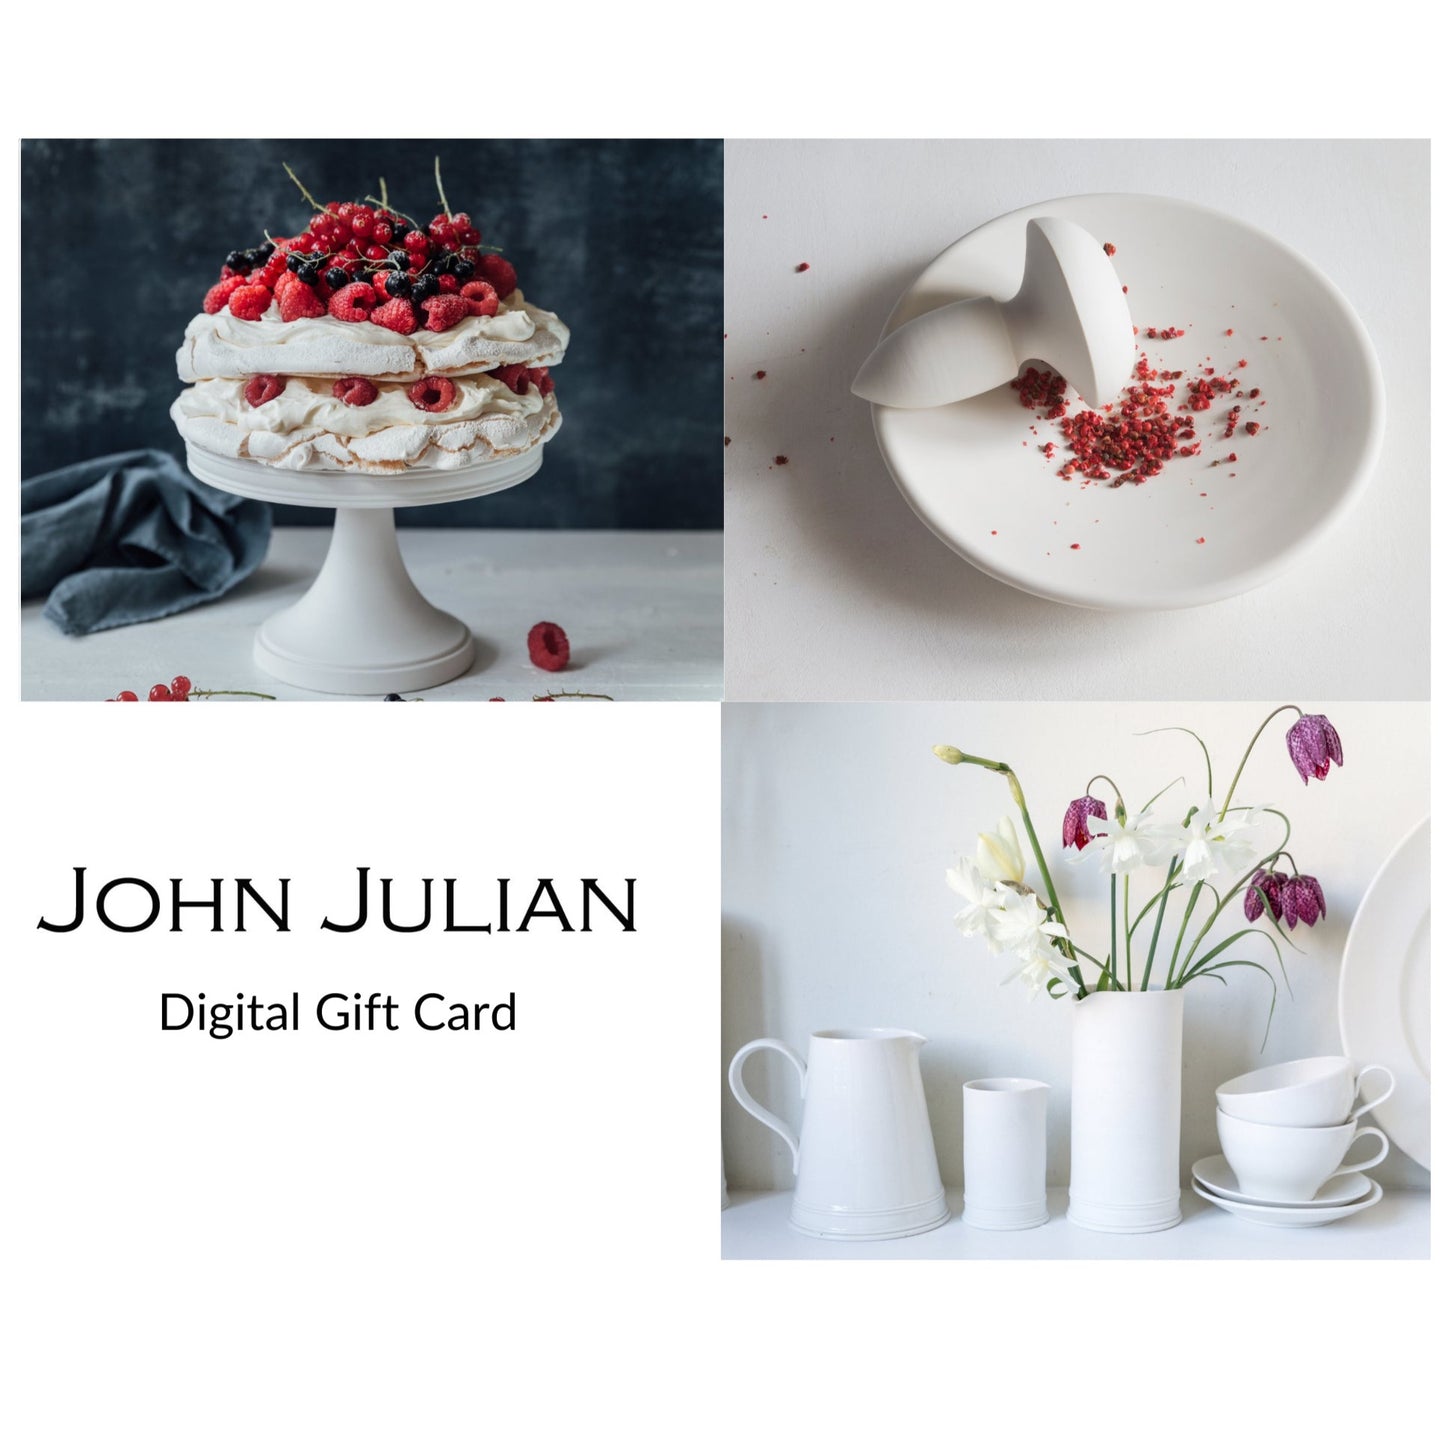 John Julian Digital Gift Card